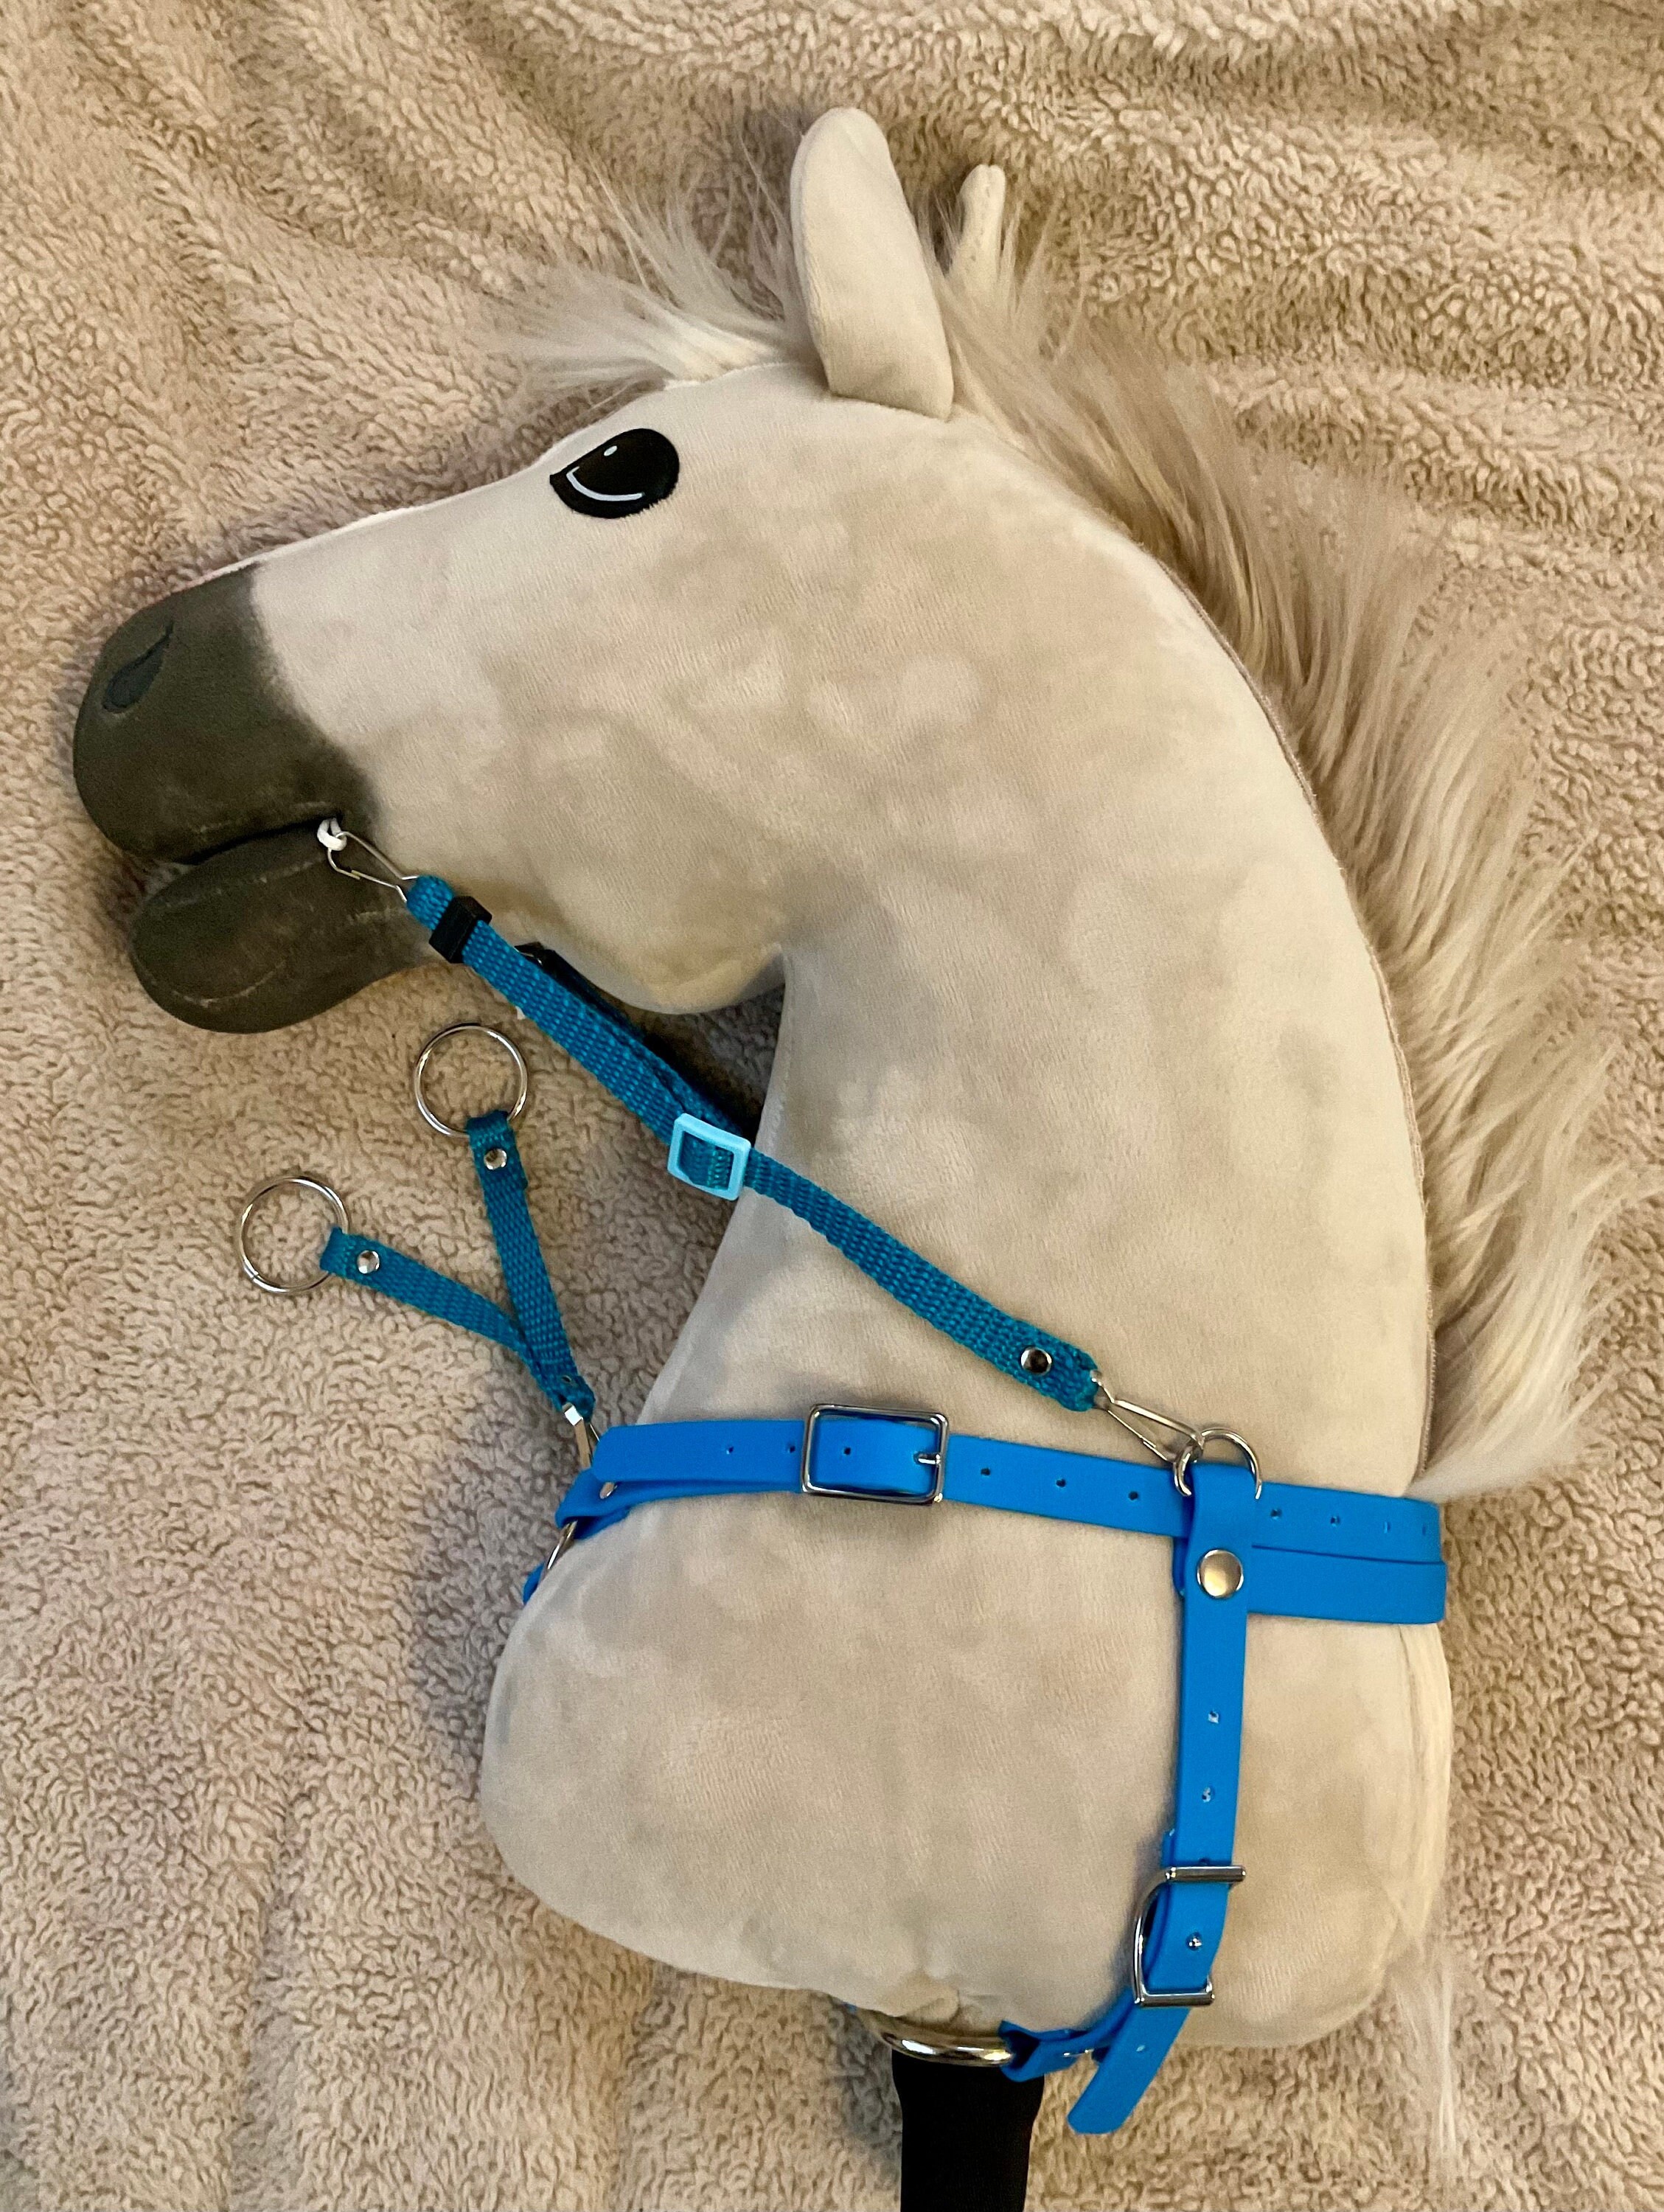 Martingale for Hobby Horse Fully Adjustable Hobbyhorse 